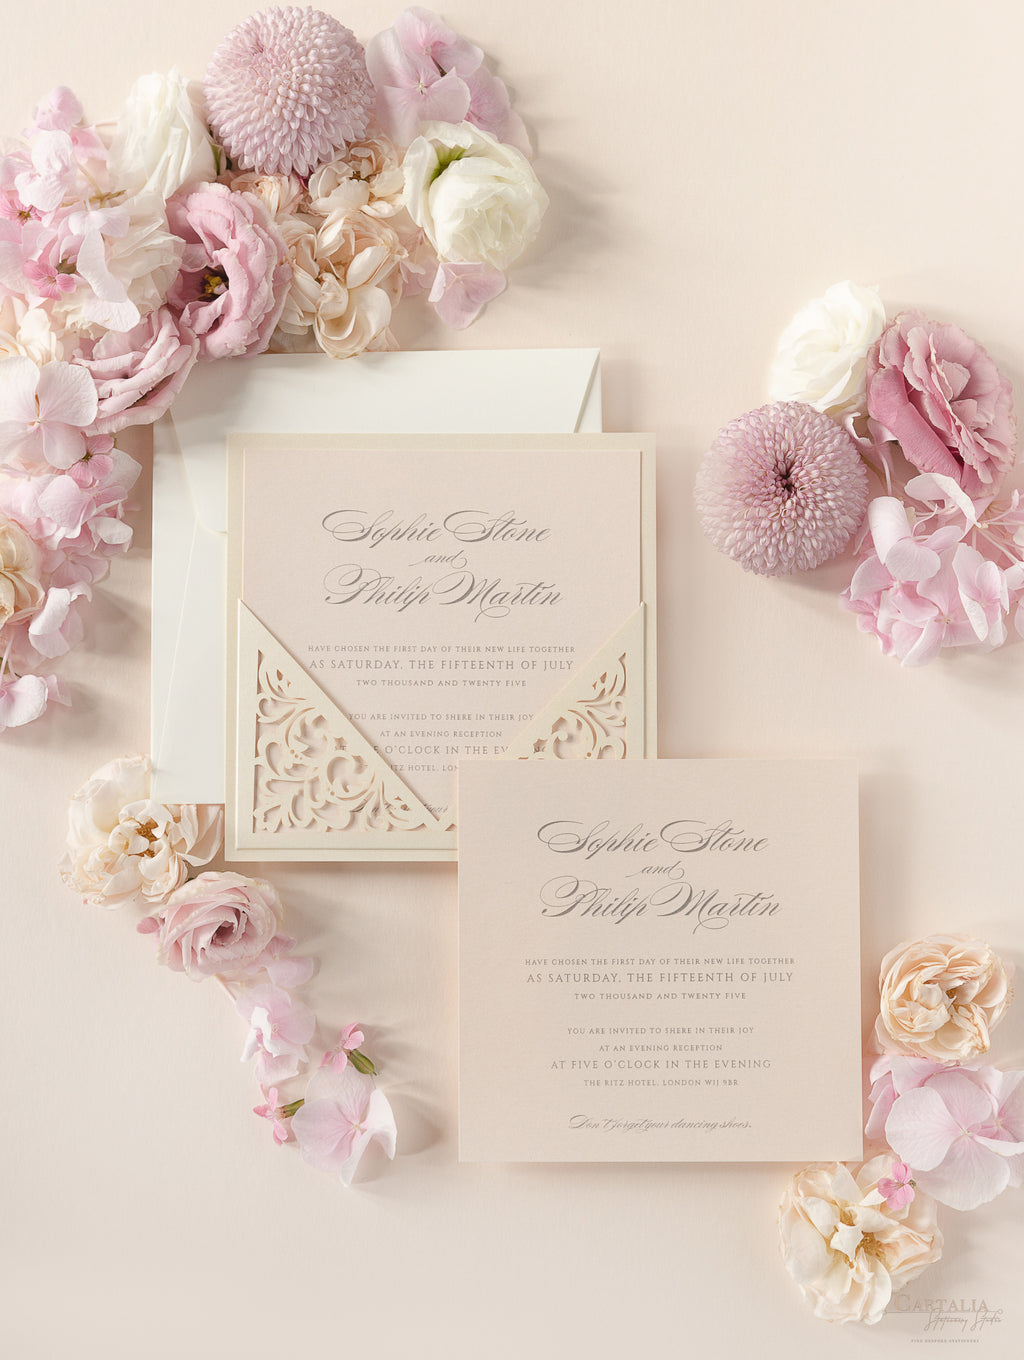 Champagne Laser Cut Lace Pocketfold Wedding Invitation + Wedding Wish –  Cartalia